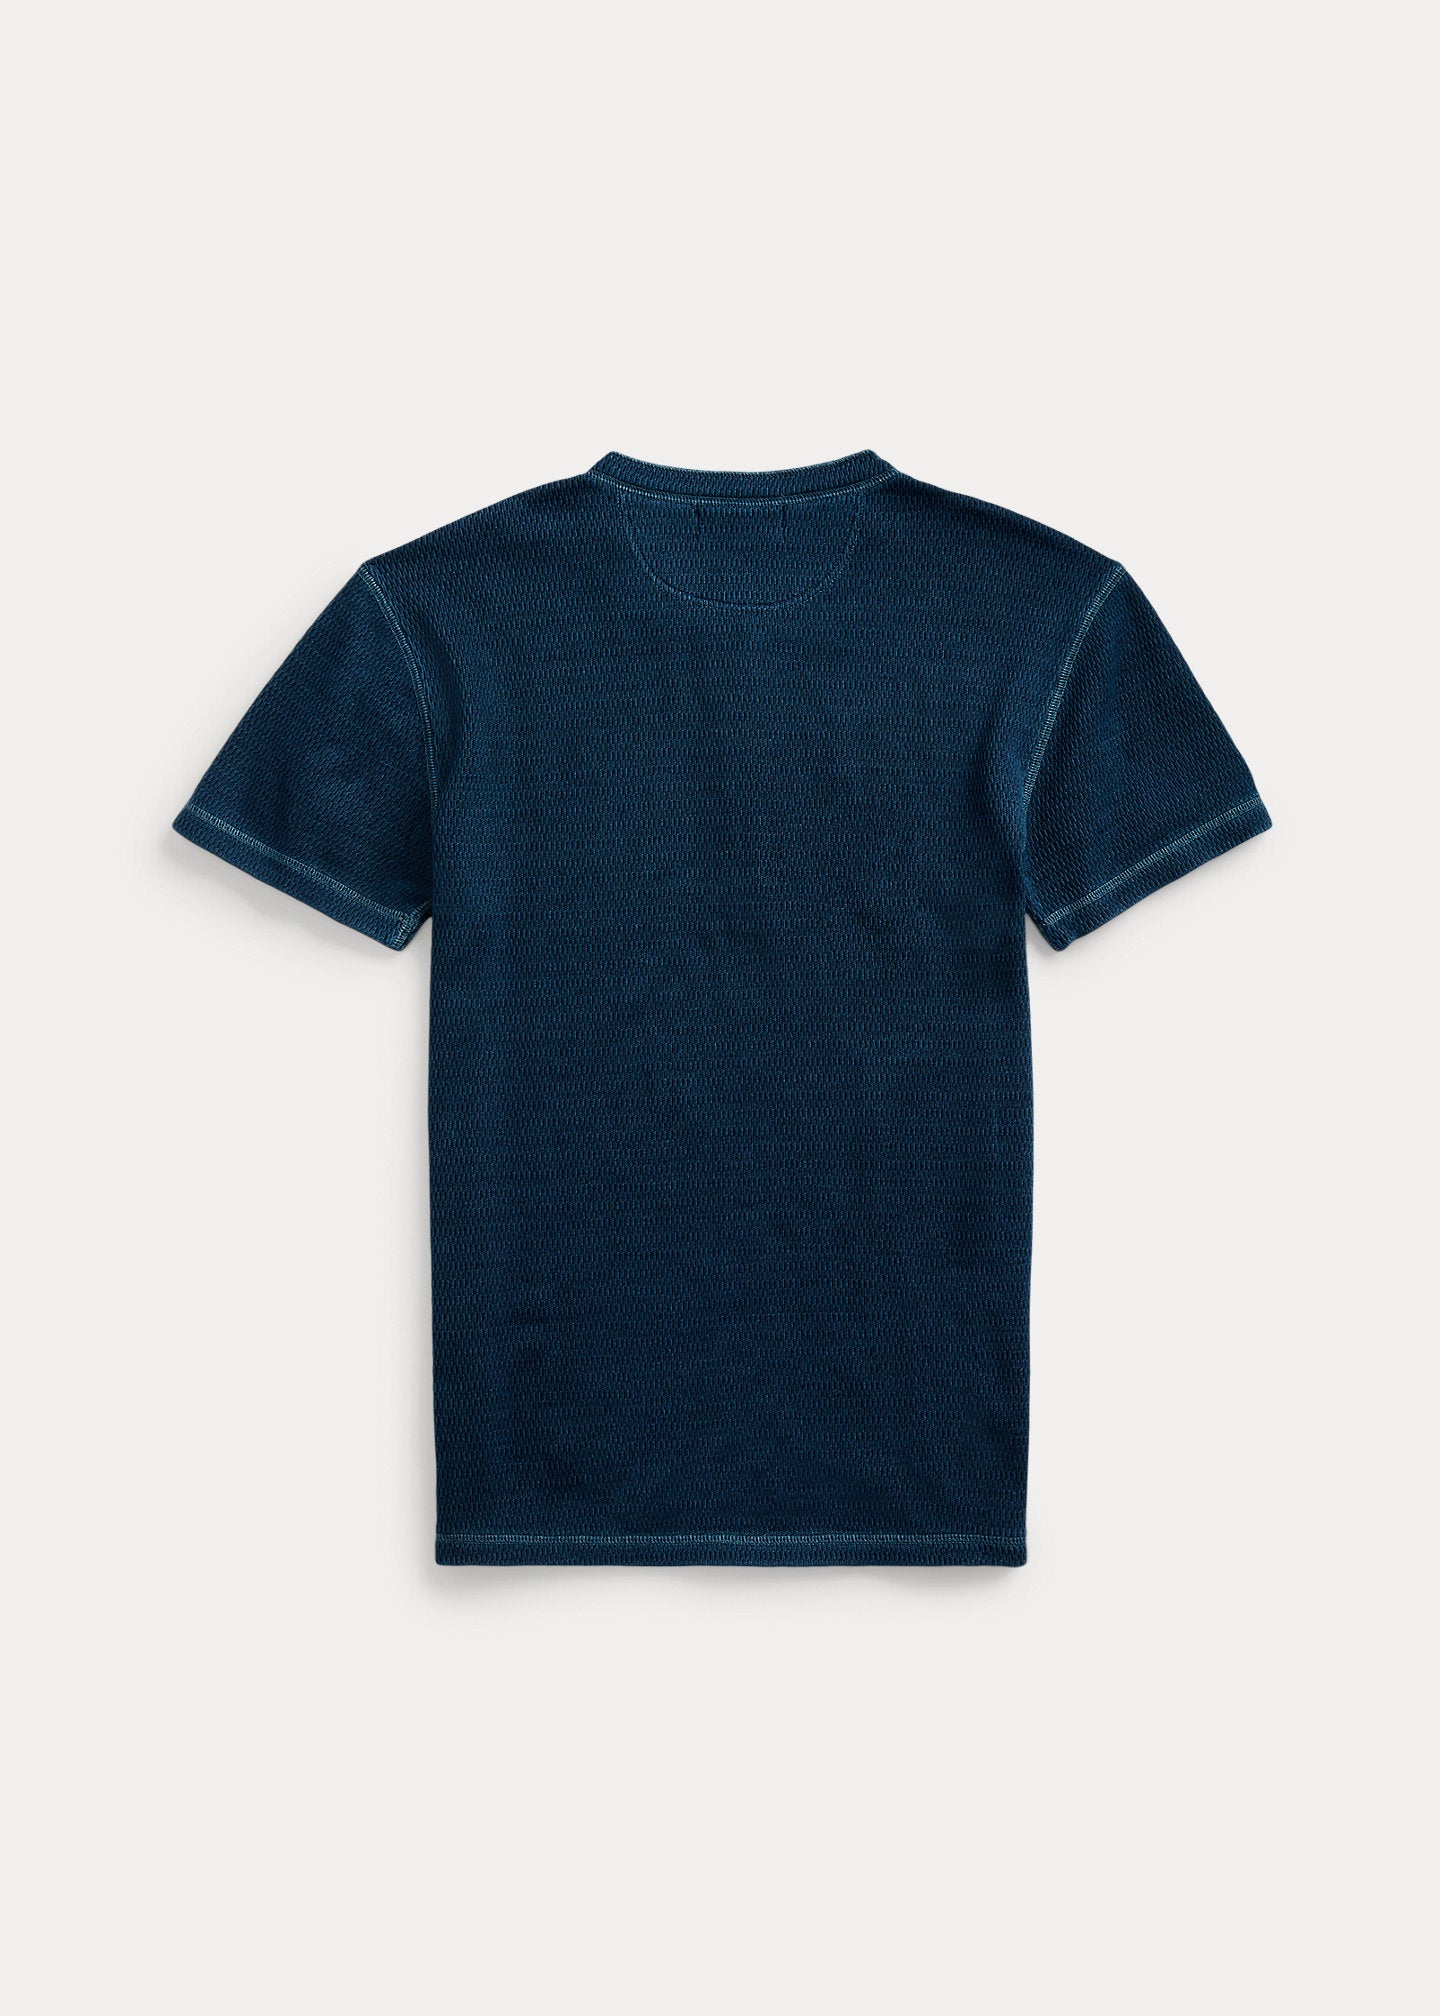 RRL Waffle-Knit Short-Sleeve Henley Shirt